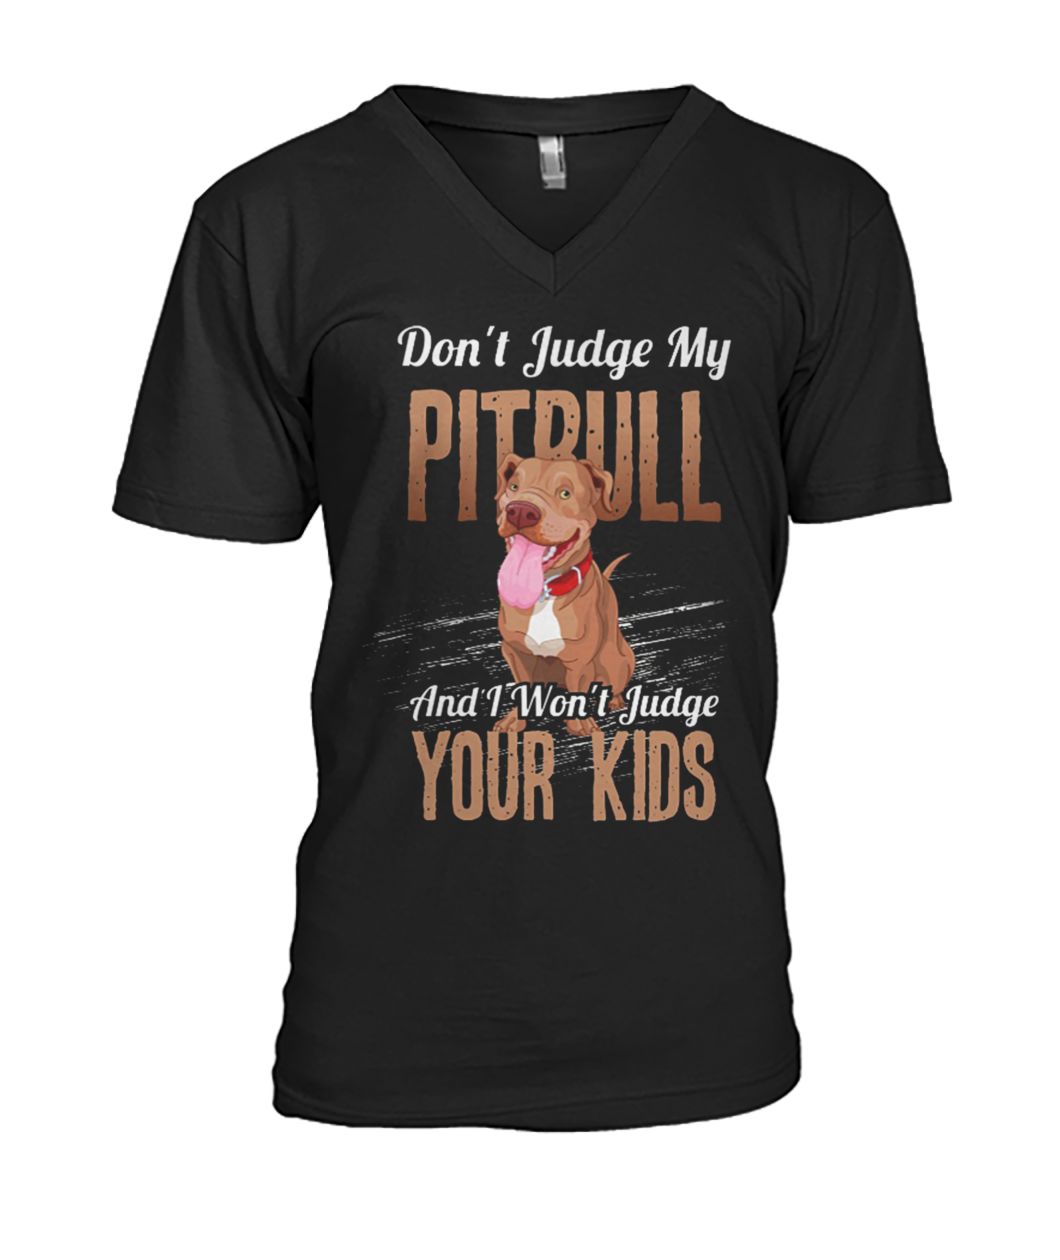 Don't judge my pitbull and I won't judge your kids mens v-neck